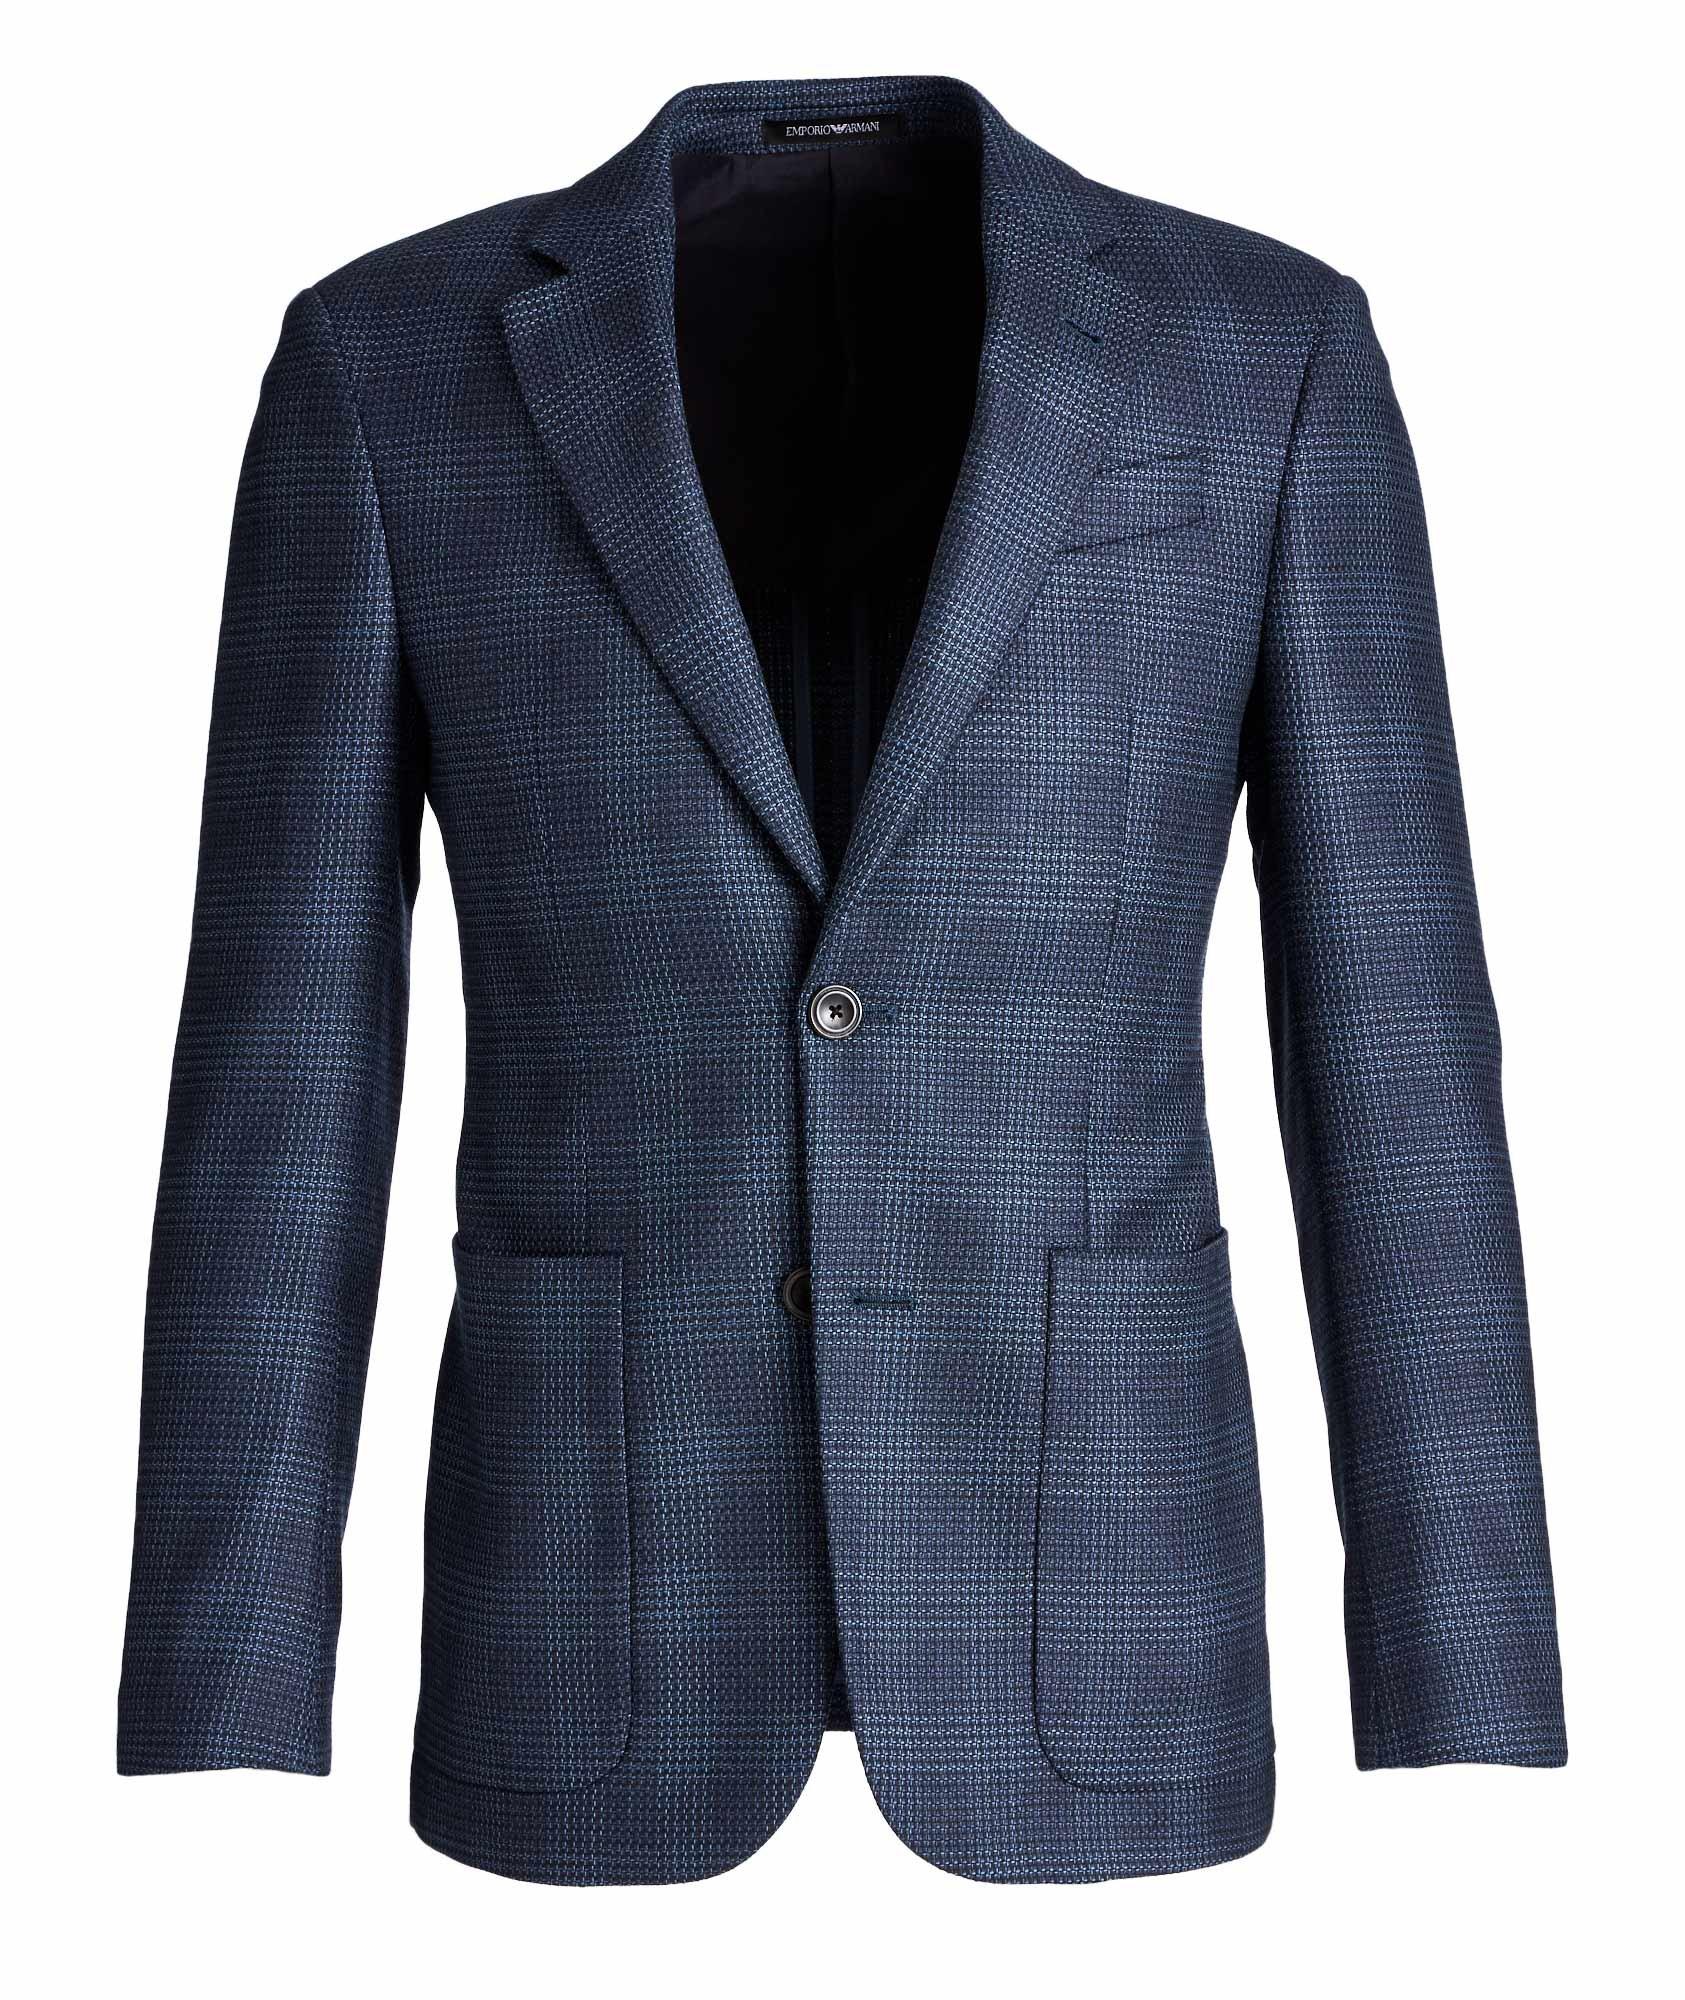 G-Line Deco Tweed Sports Jacket image 0